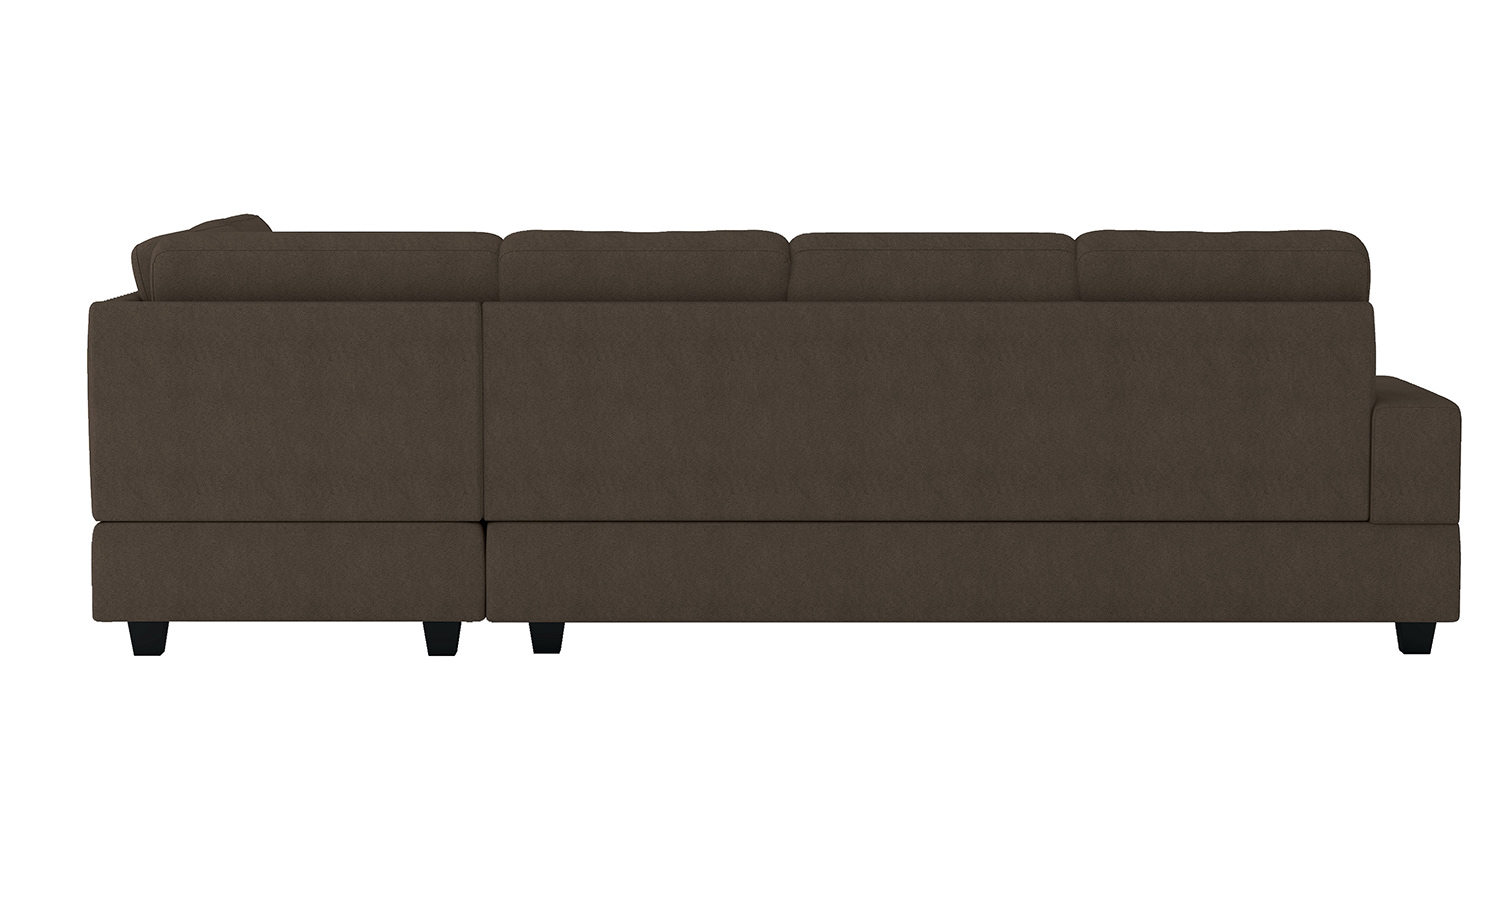 Homelegance Maston Sectional Sofa Set - Chocolate